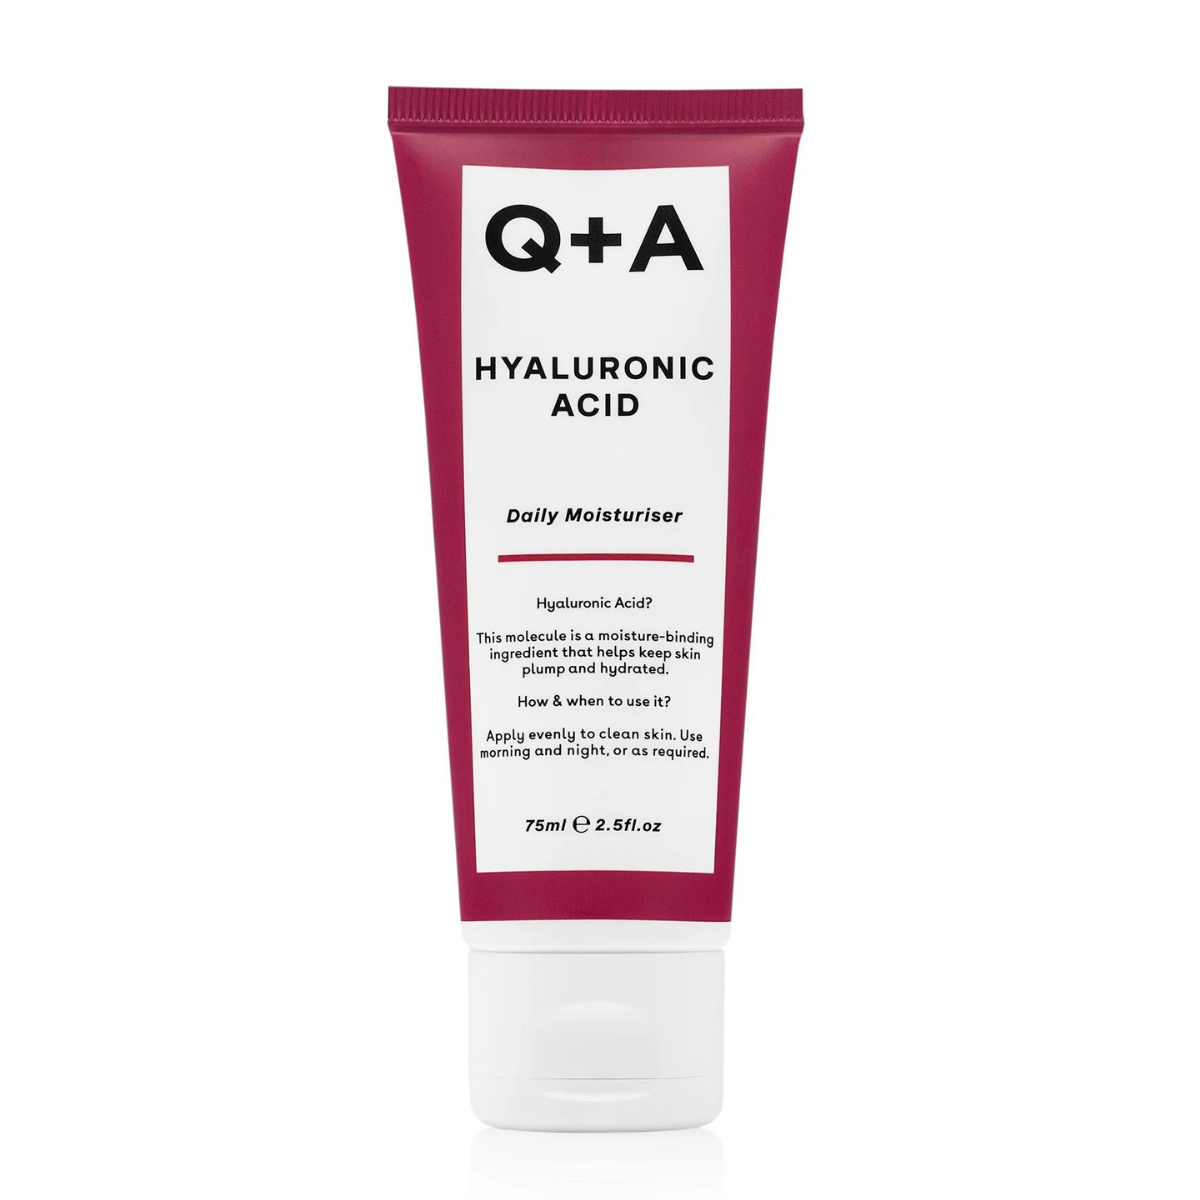 Q+A Hyaluronic Acid Moisturiser